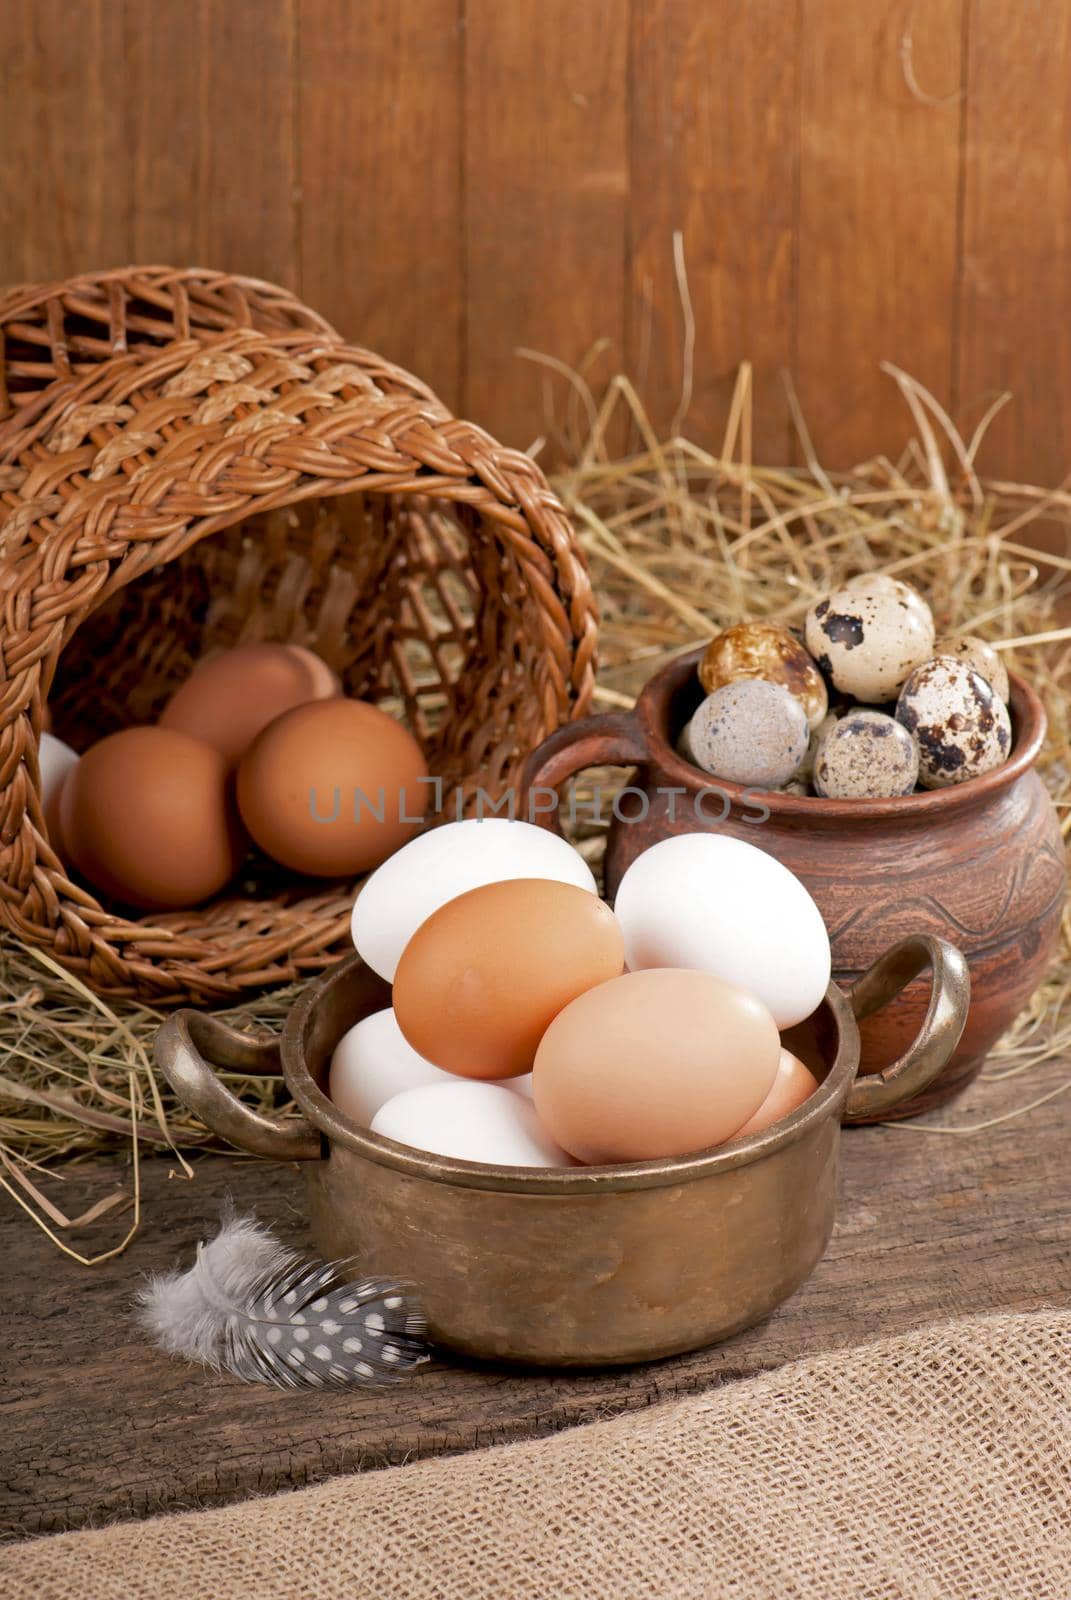 Chicken eggs in basket on wooden background by aprilphoto